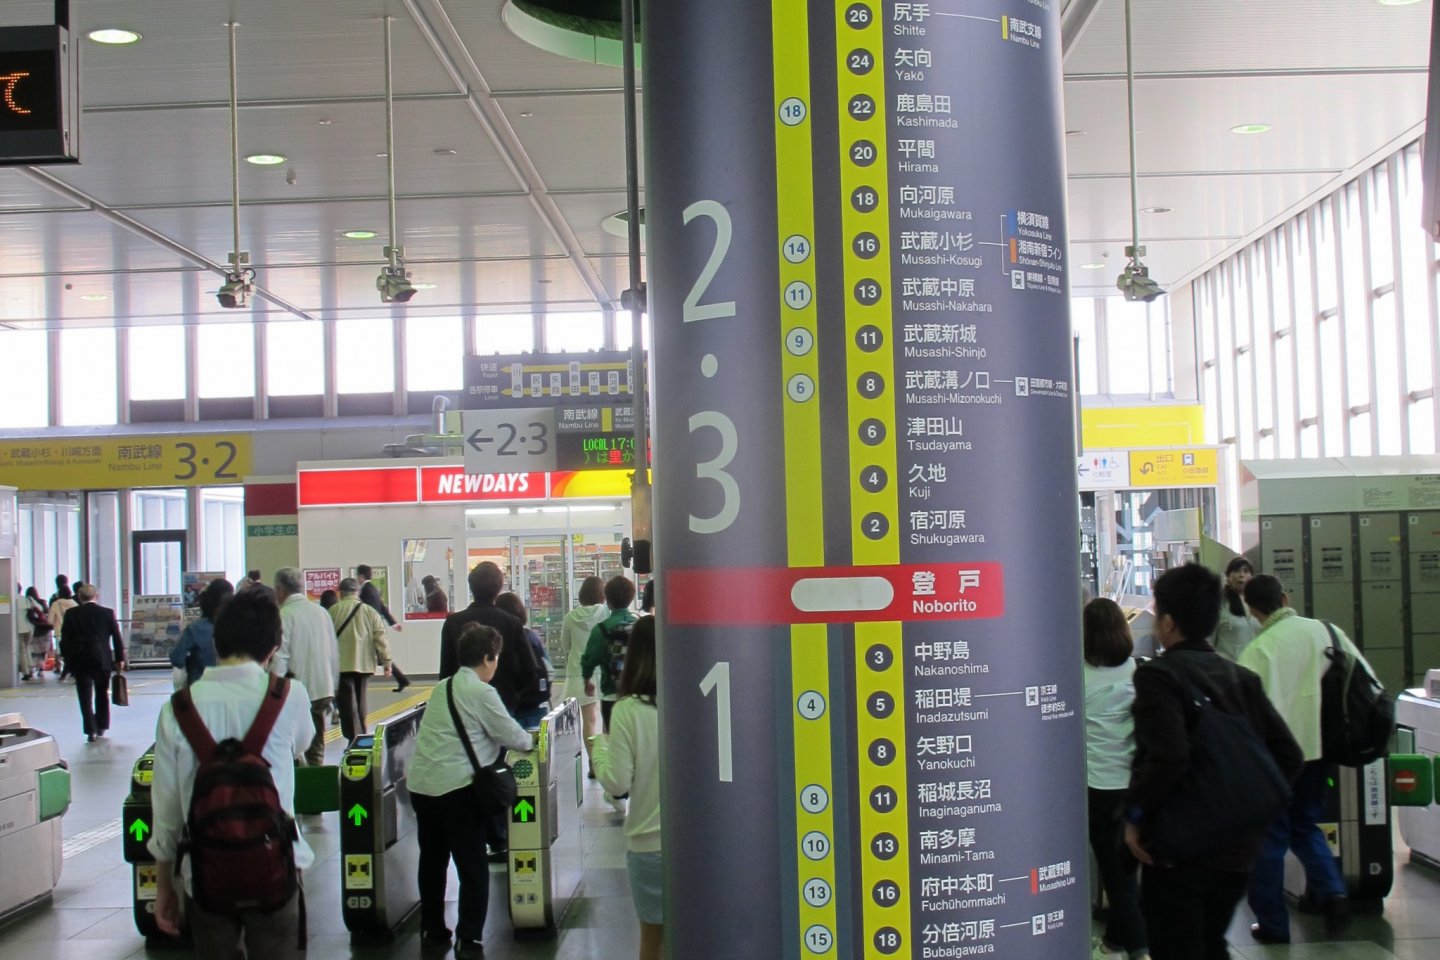 The Nambu line's route